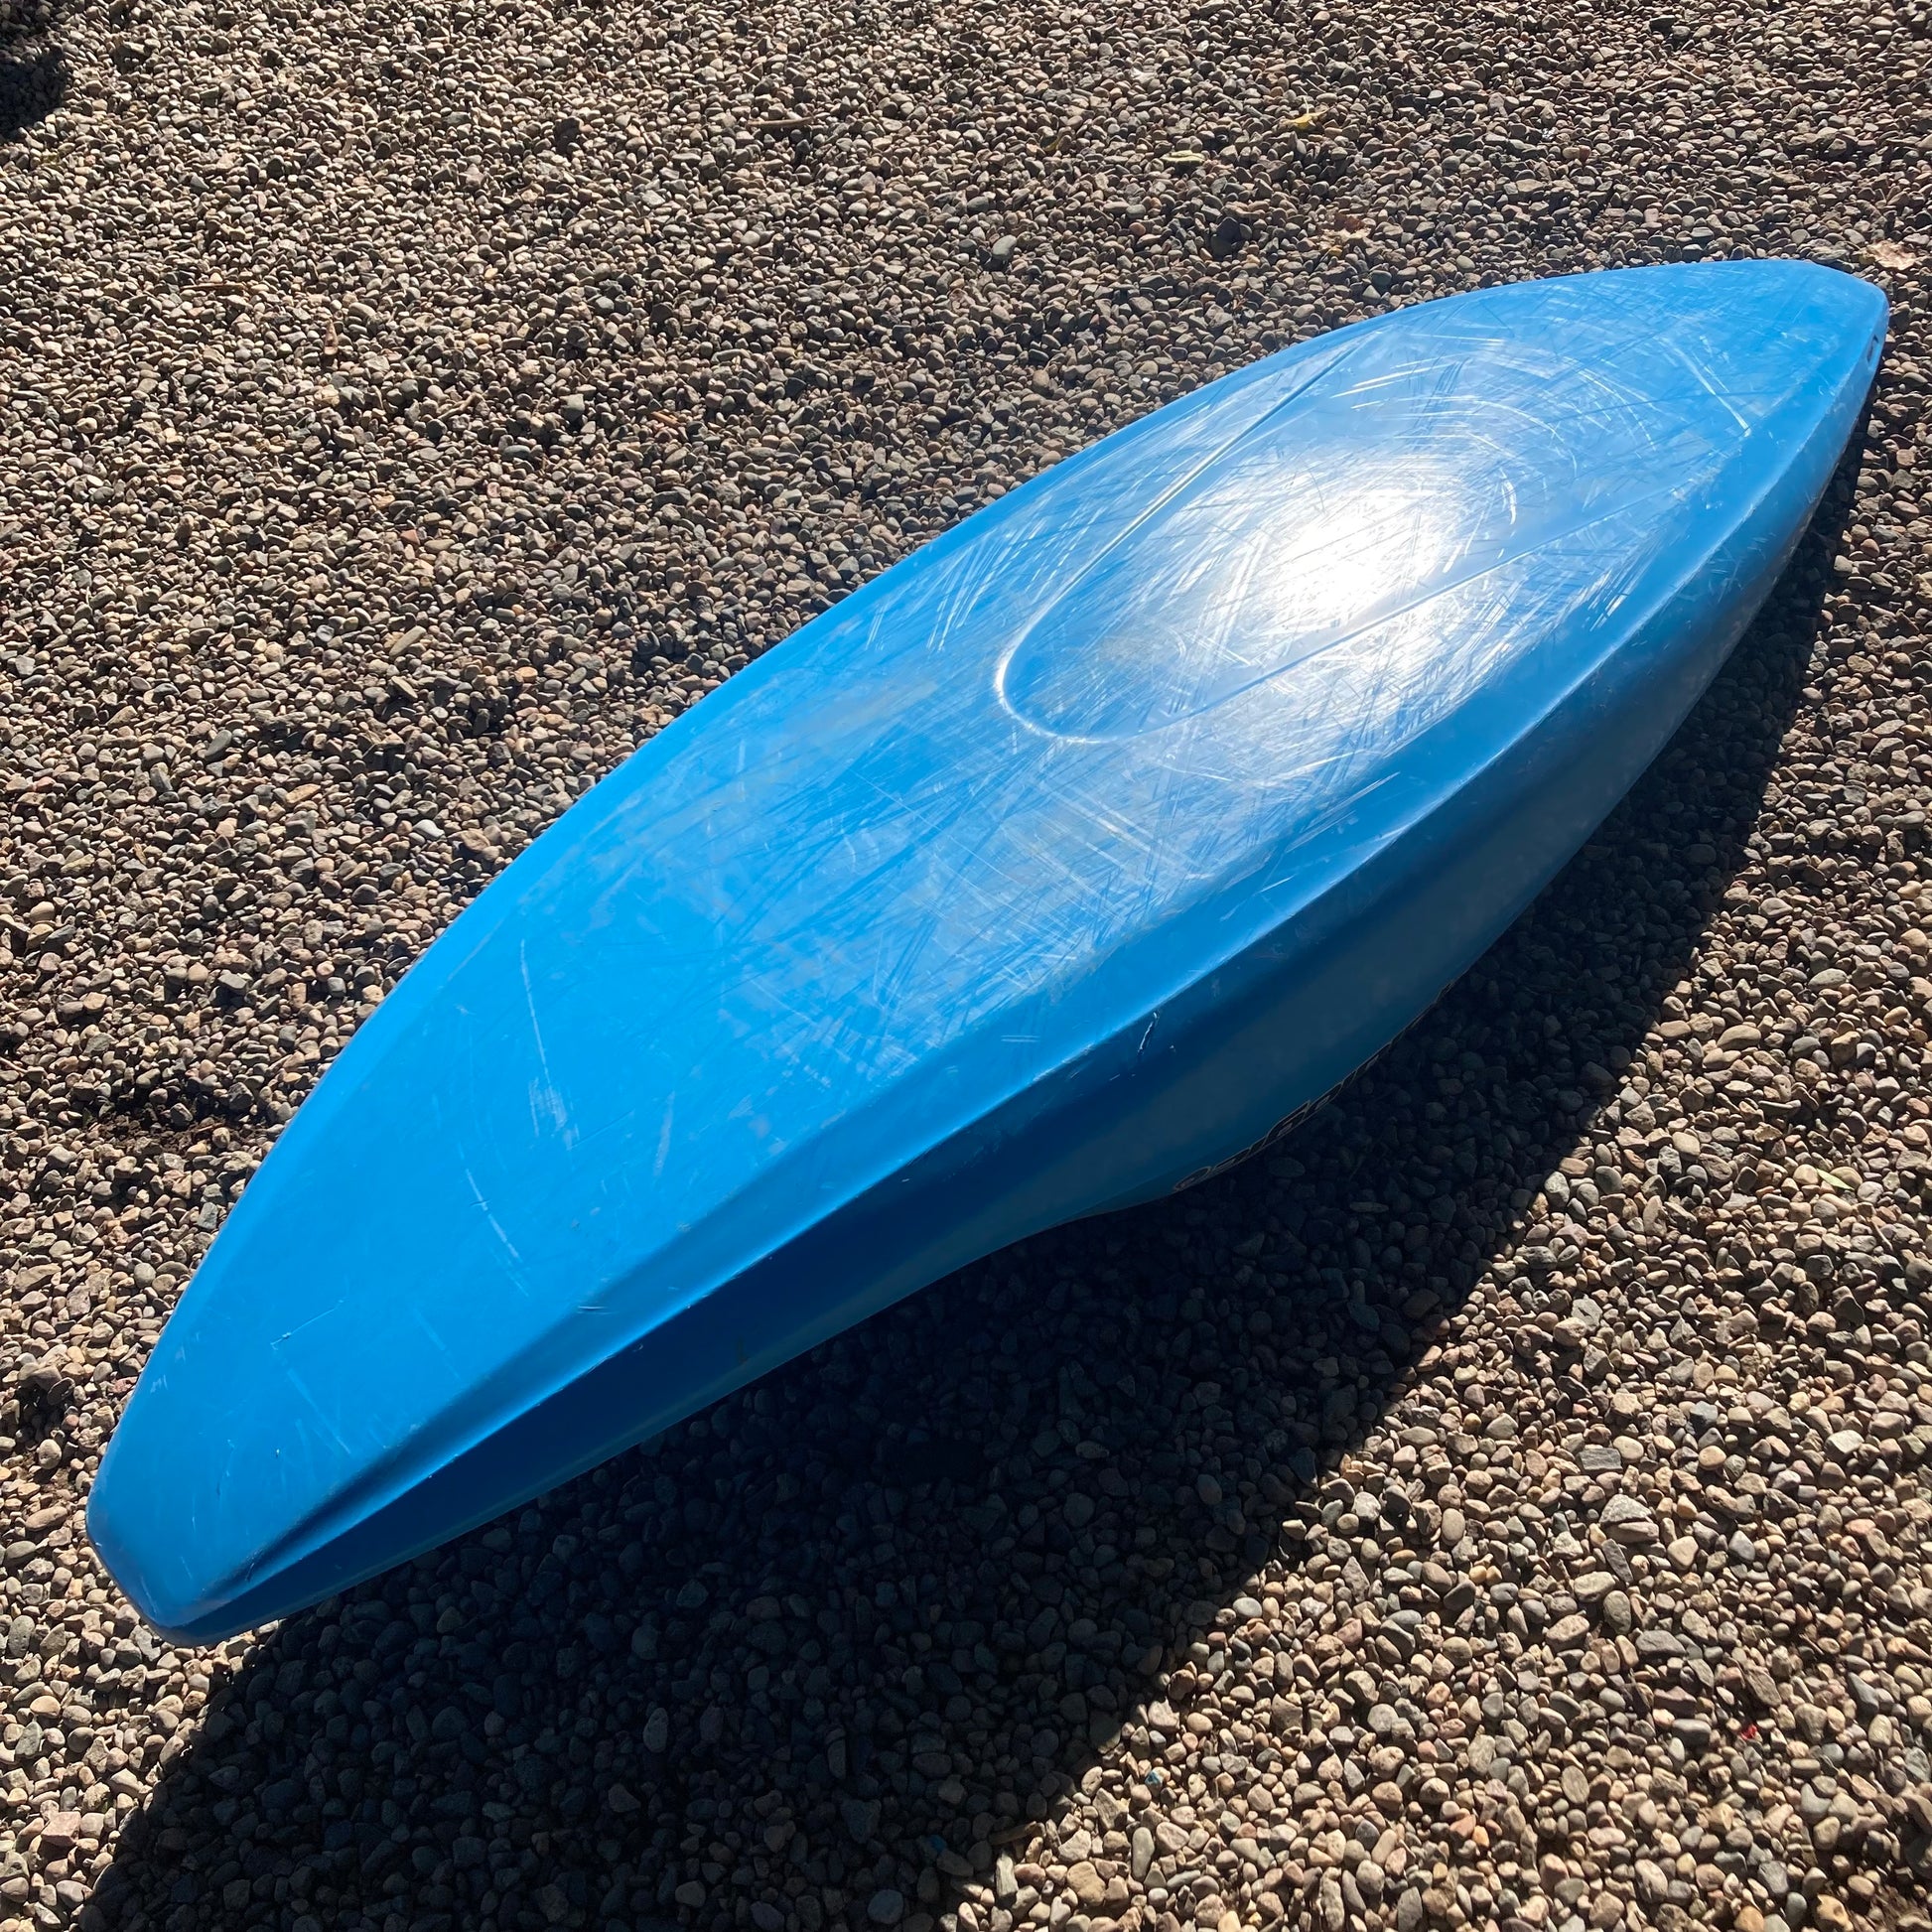 A blue Demo Homeslice kayak laying on the ground. (Brand: LiquidLogic)